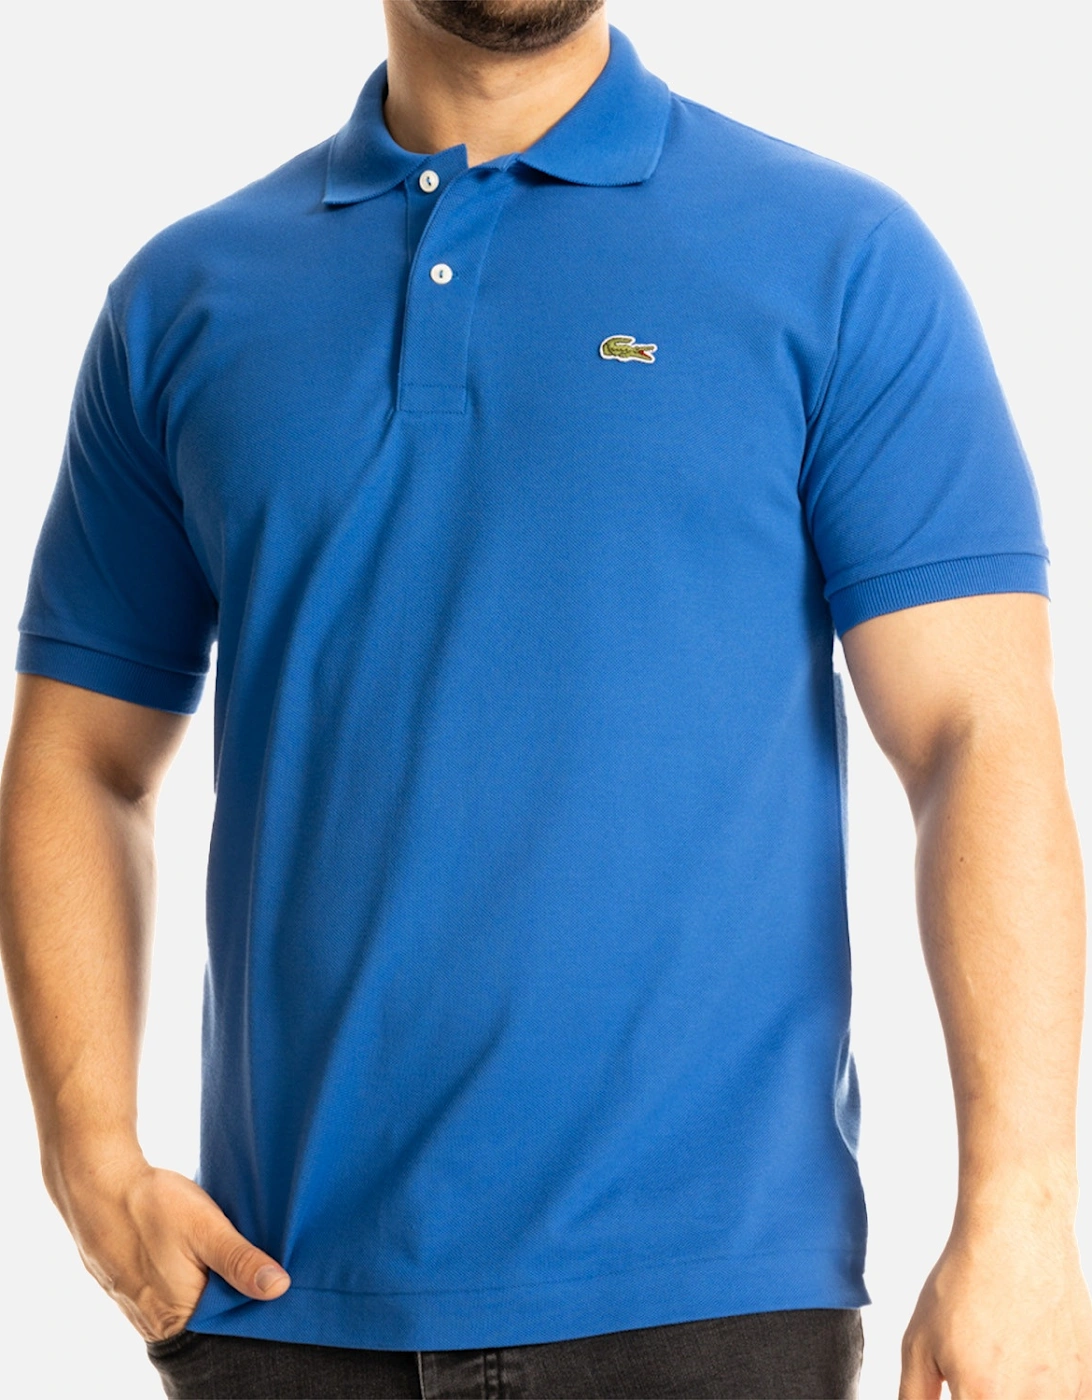 Mens S/S Polo Shirt (Royal Blue)